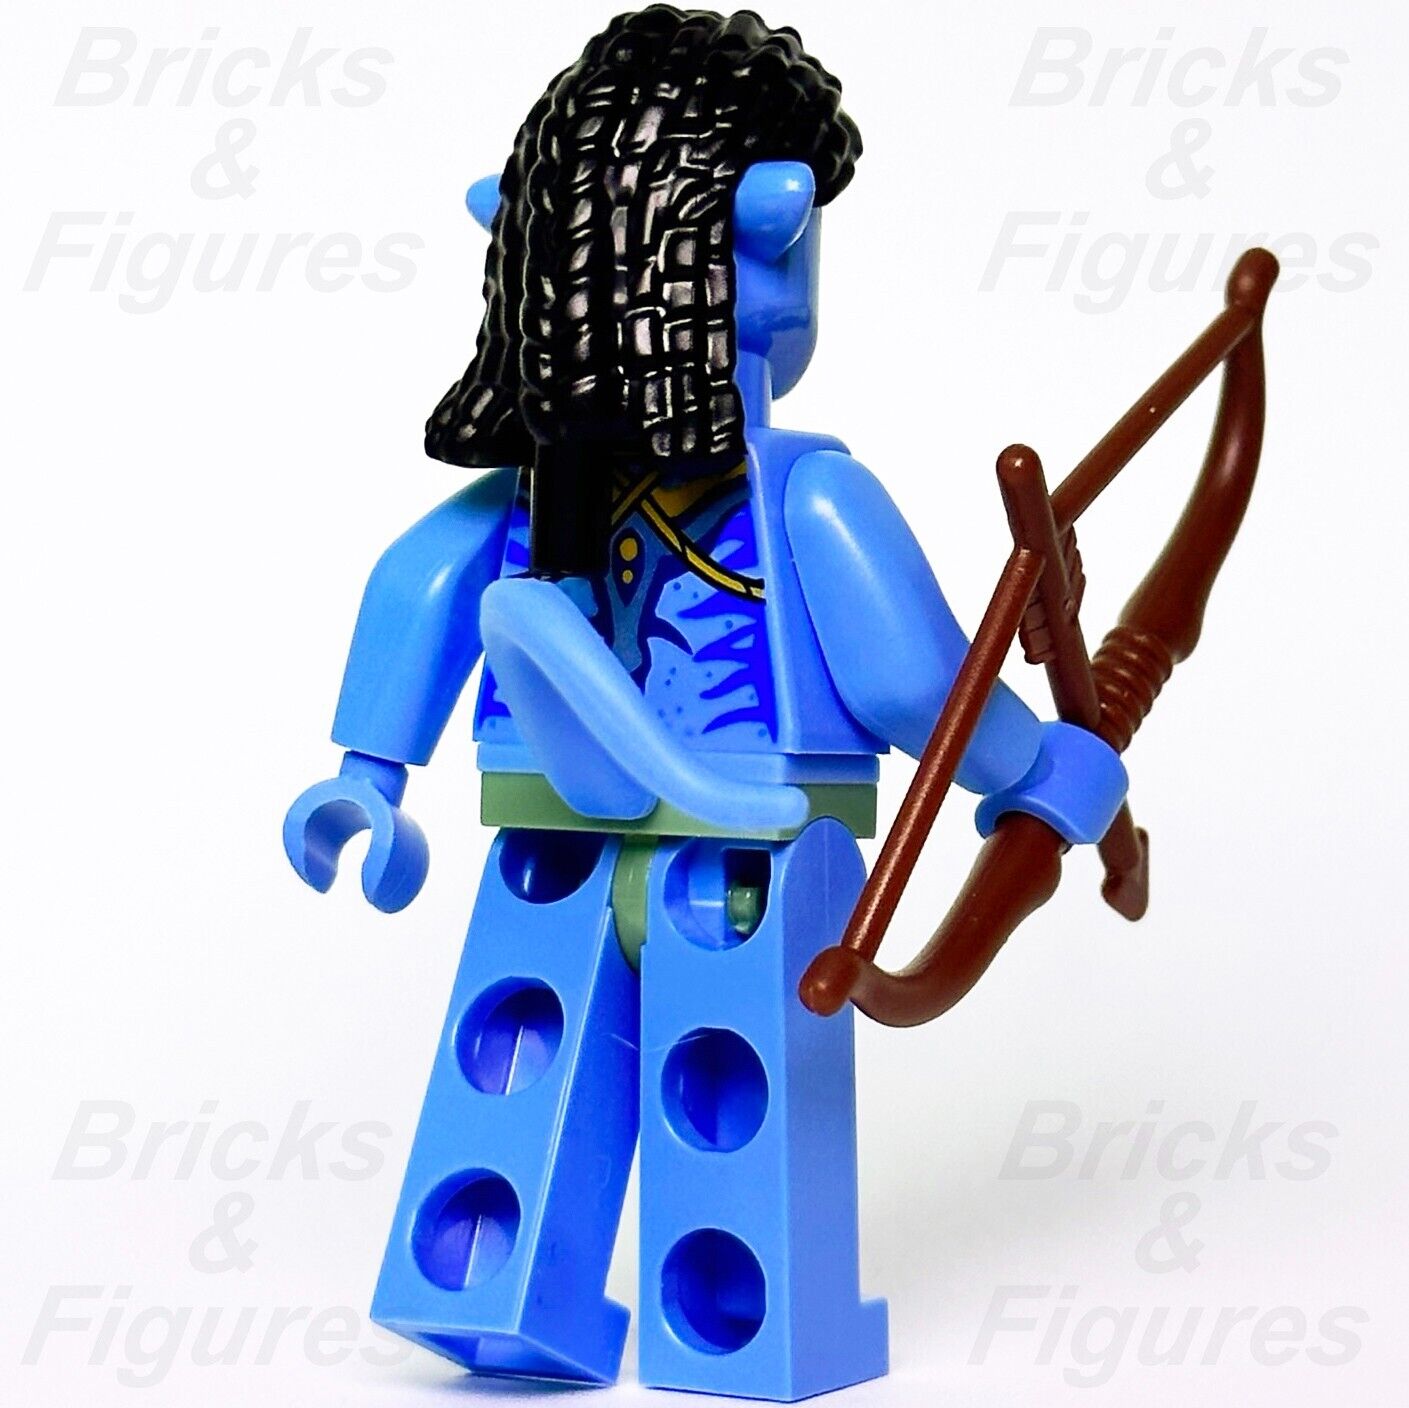 LEGO Avatar Trudy Chacon Minifigure RDA Samson Pilot 75573 avt008 Mini